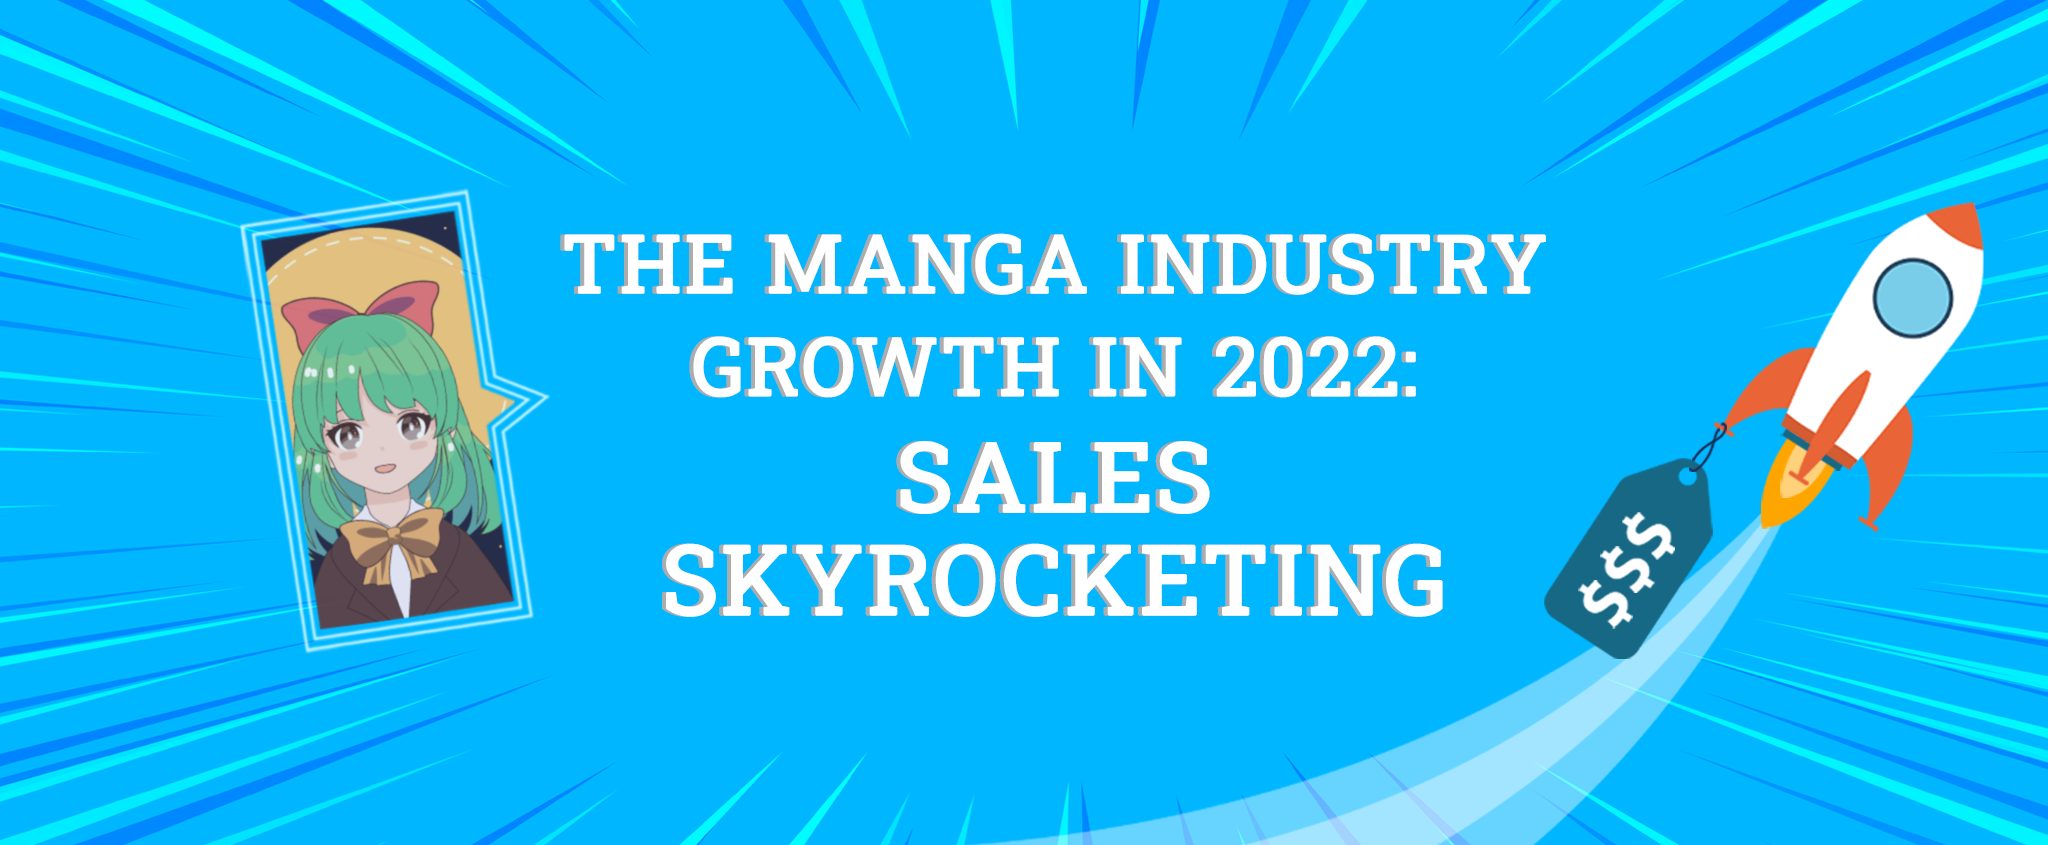 The Manga Industry Growth in 2022_Sales Skyrocketing